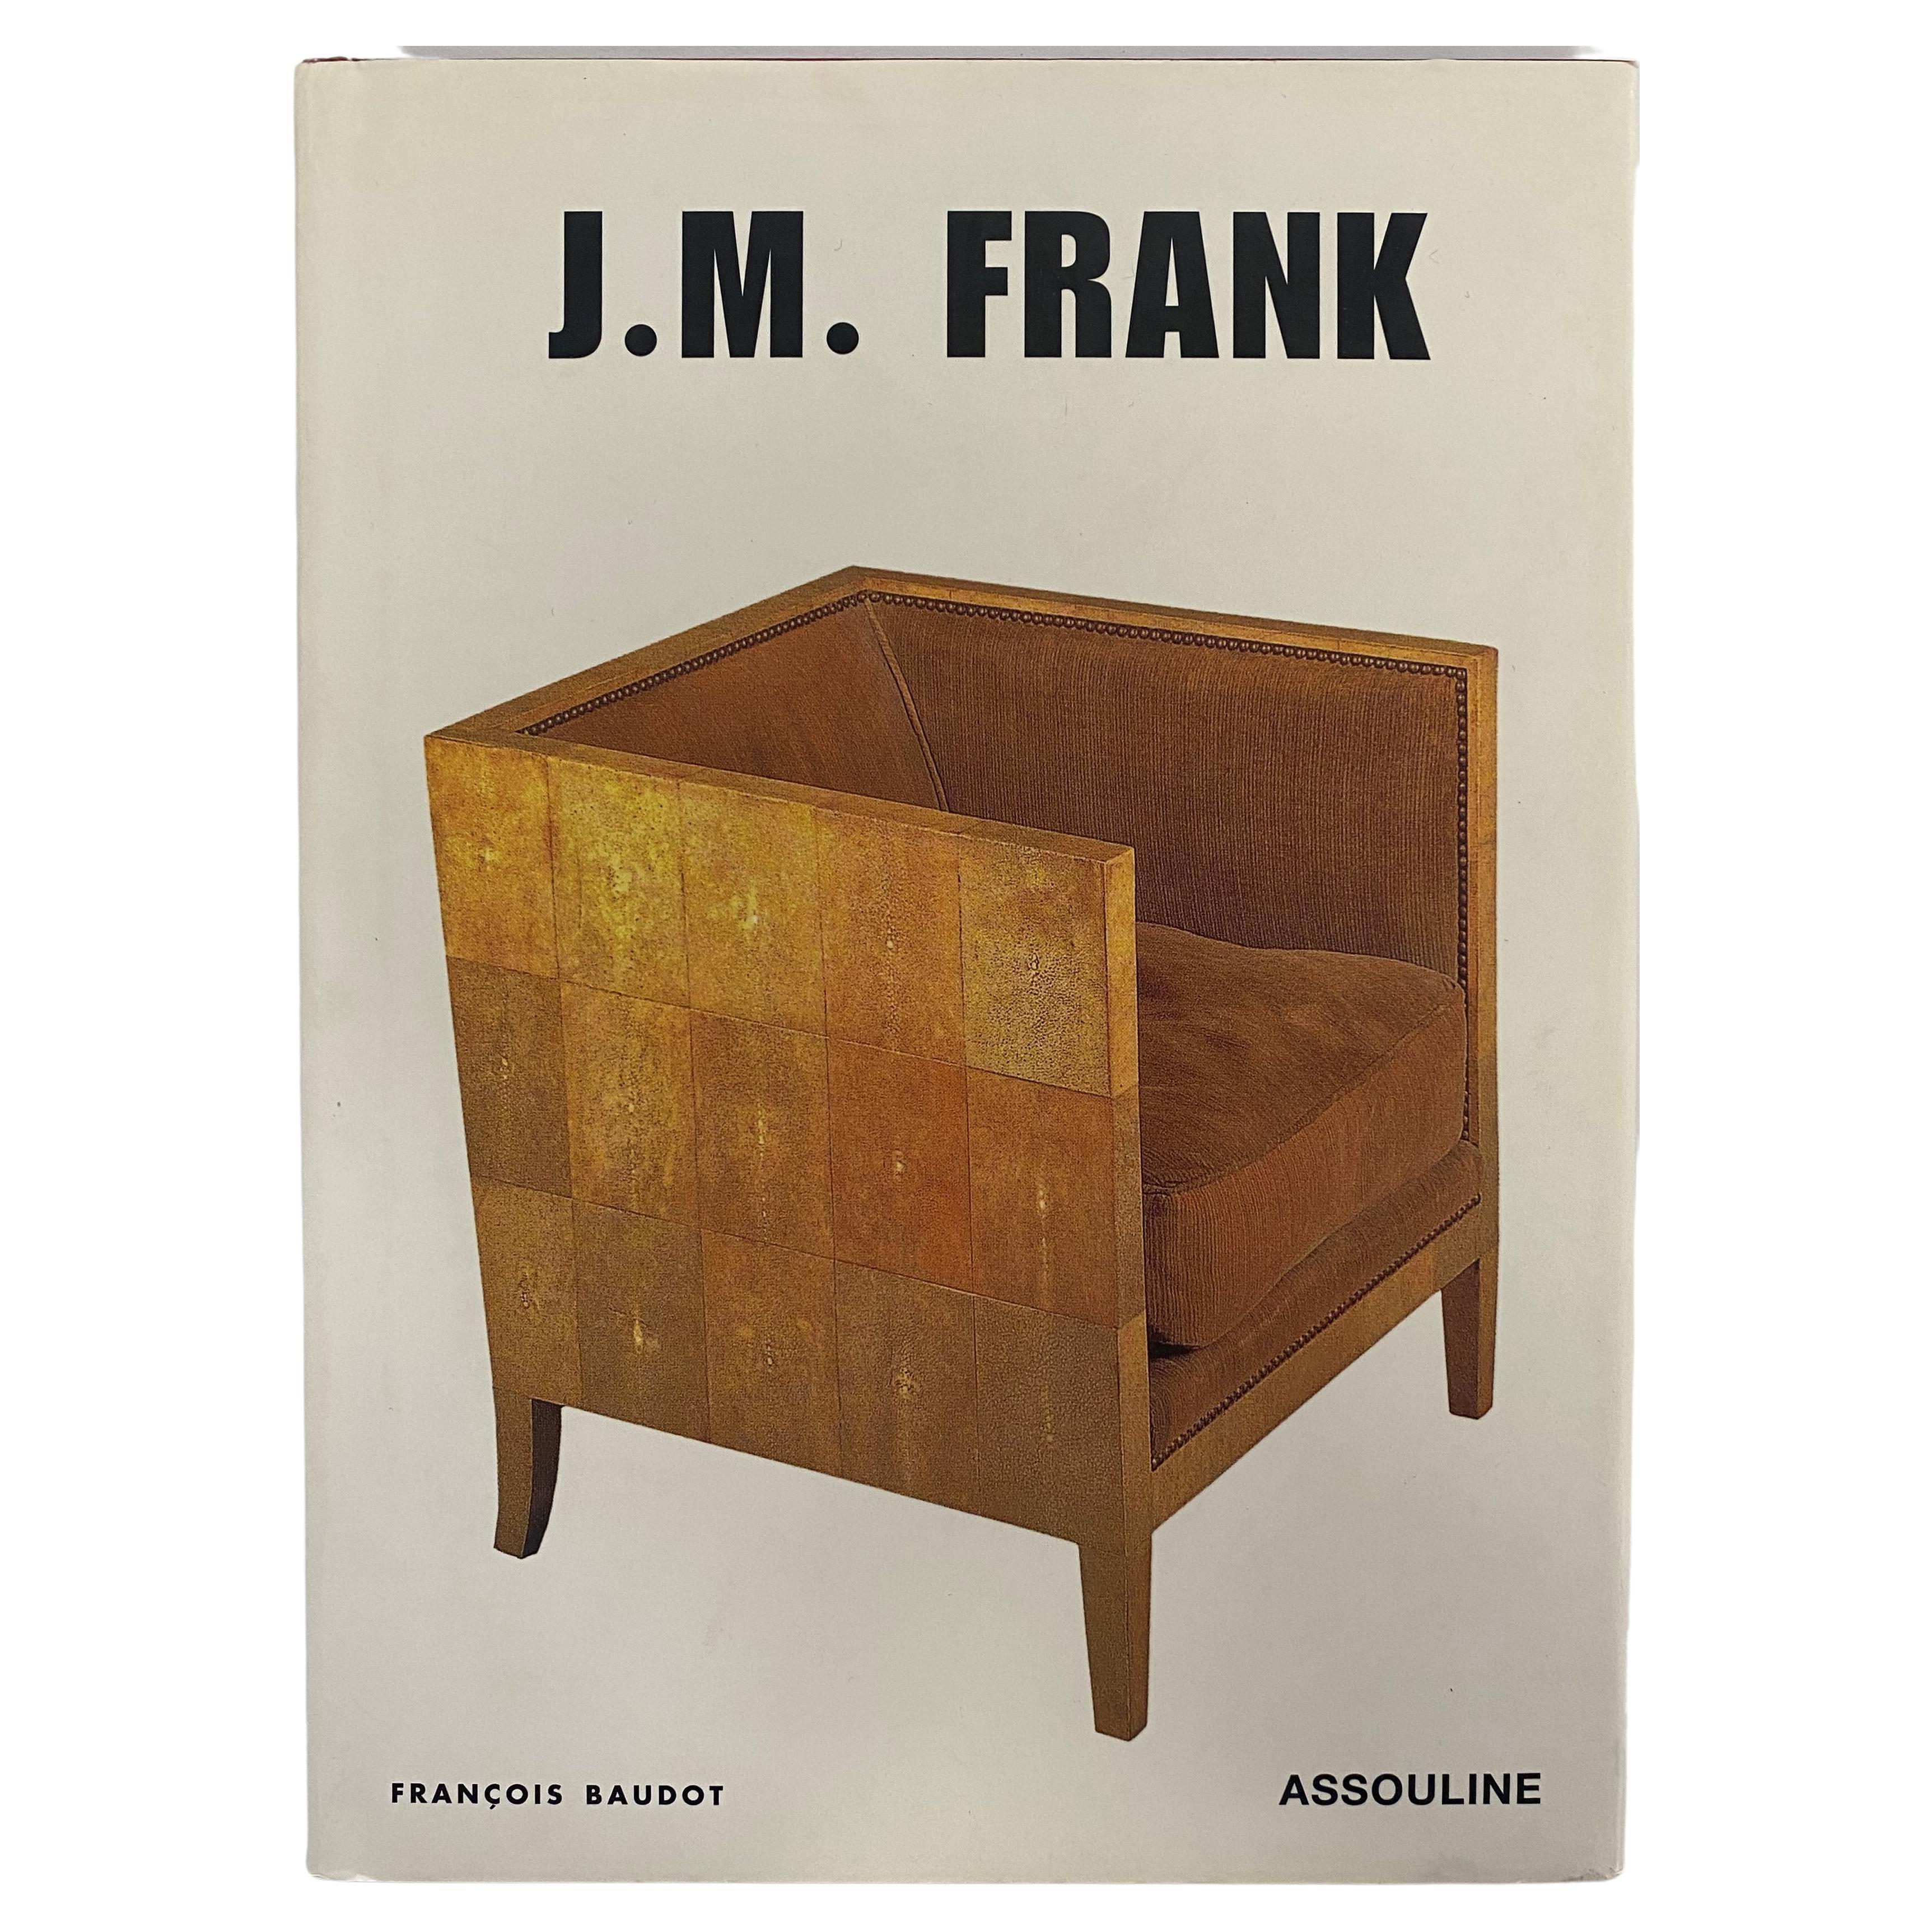 J. M. Frank by Francois Baudot 'Book'